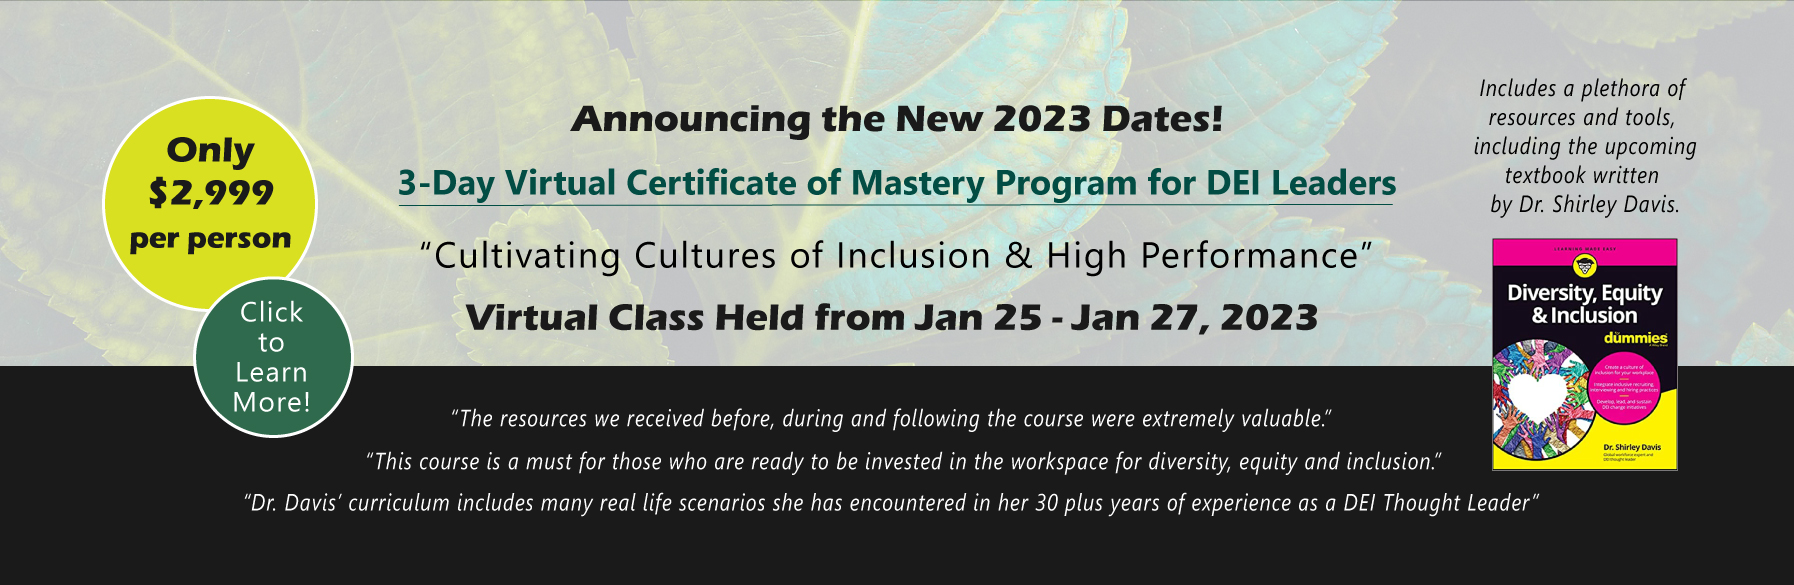 DEI Certificate of Mastery